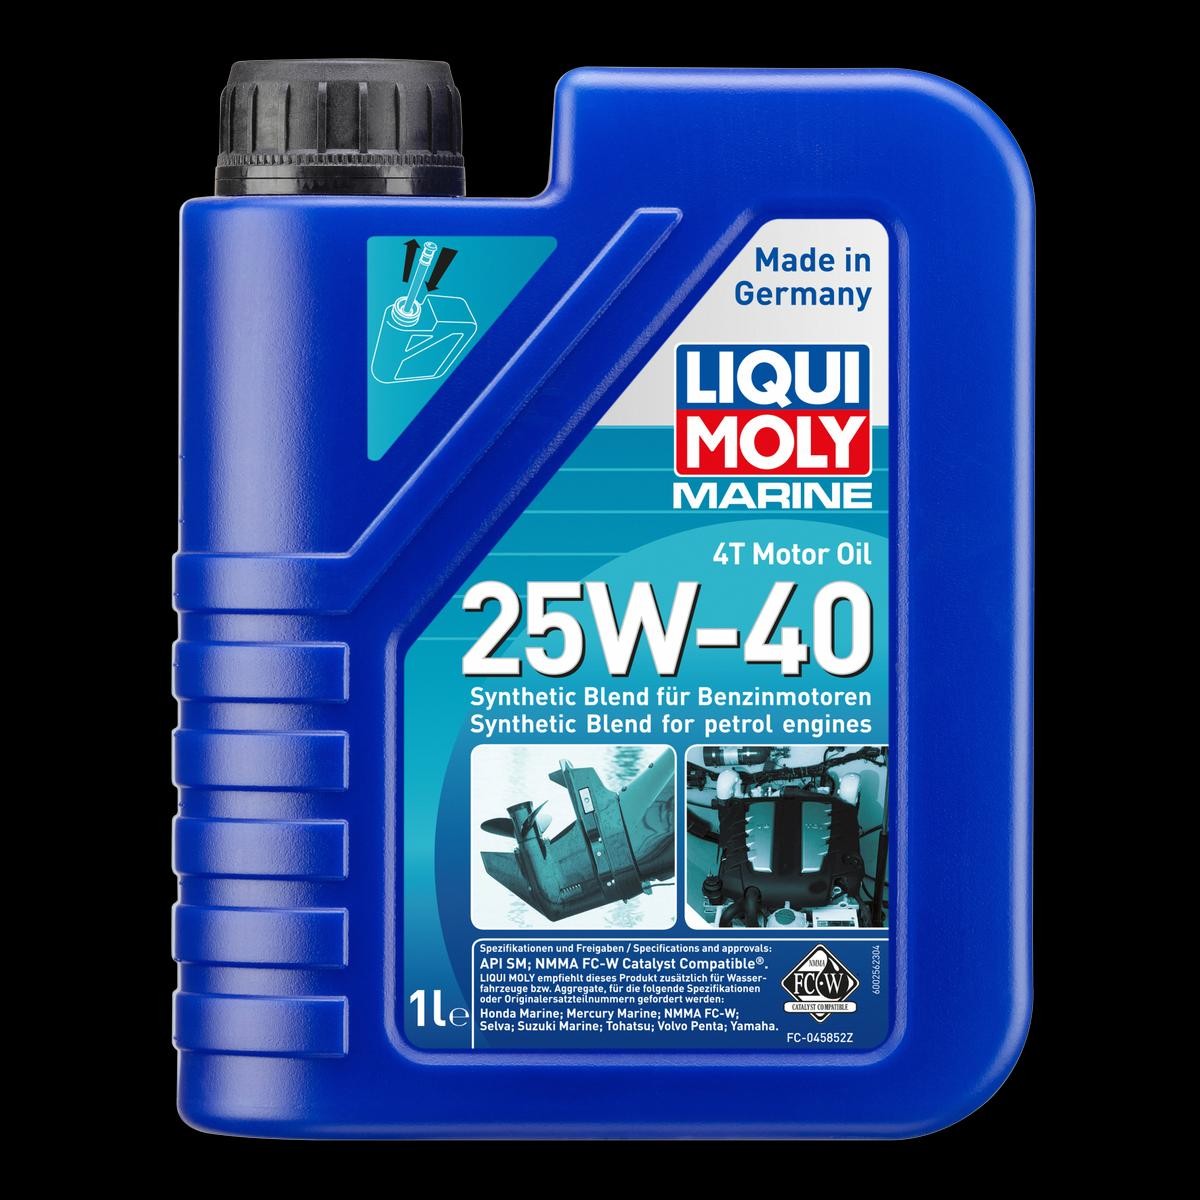 Car oil NMMA FC-W LIQUI MOLY - 25026 Marine, 4T